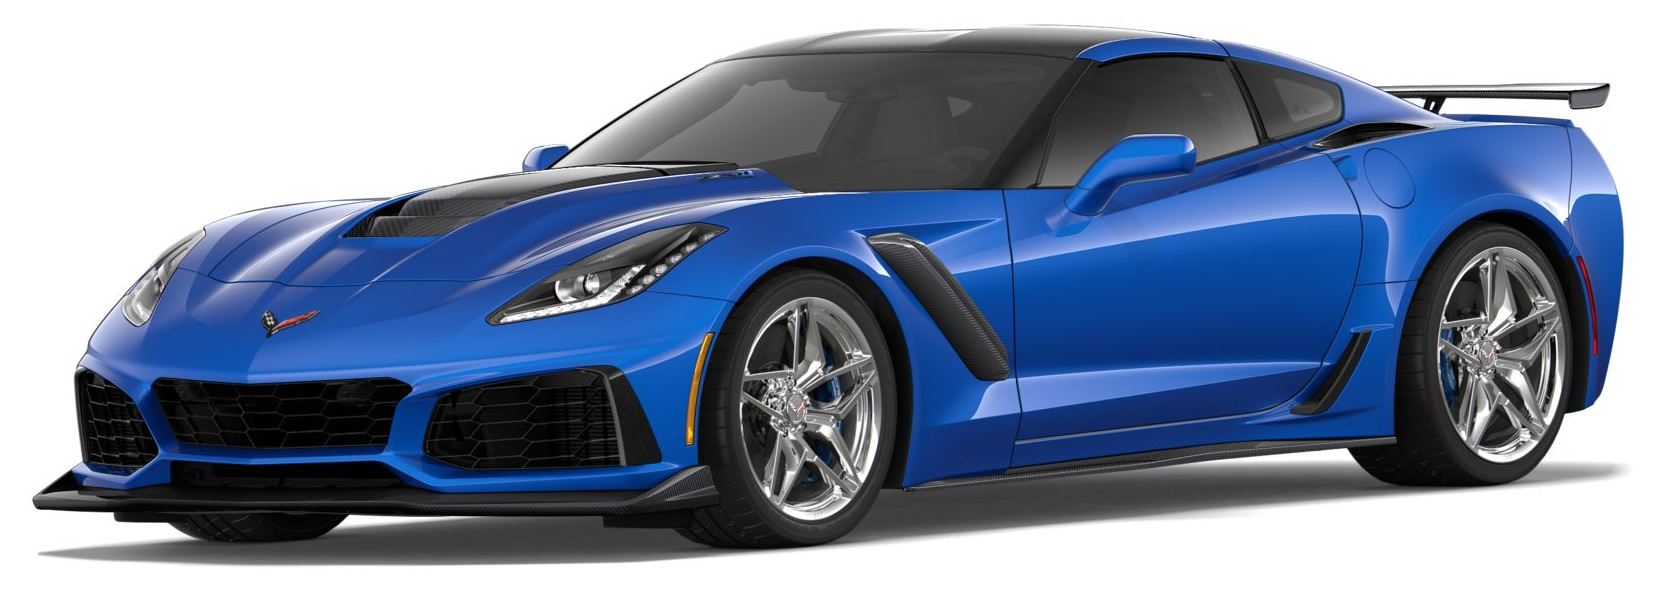 2019 Corvette ZR1 Coupe in Elkhart Blue Metallic with Chrome Wheels